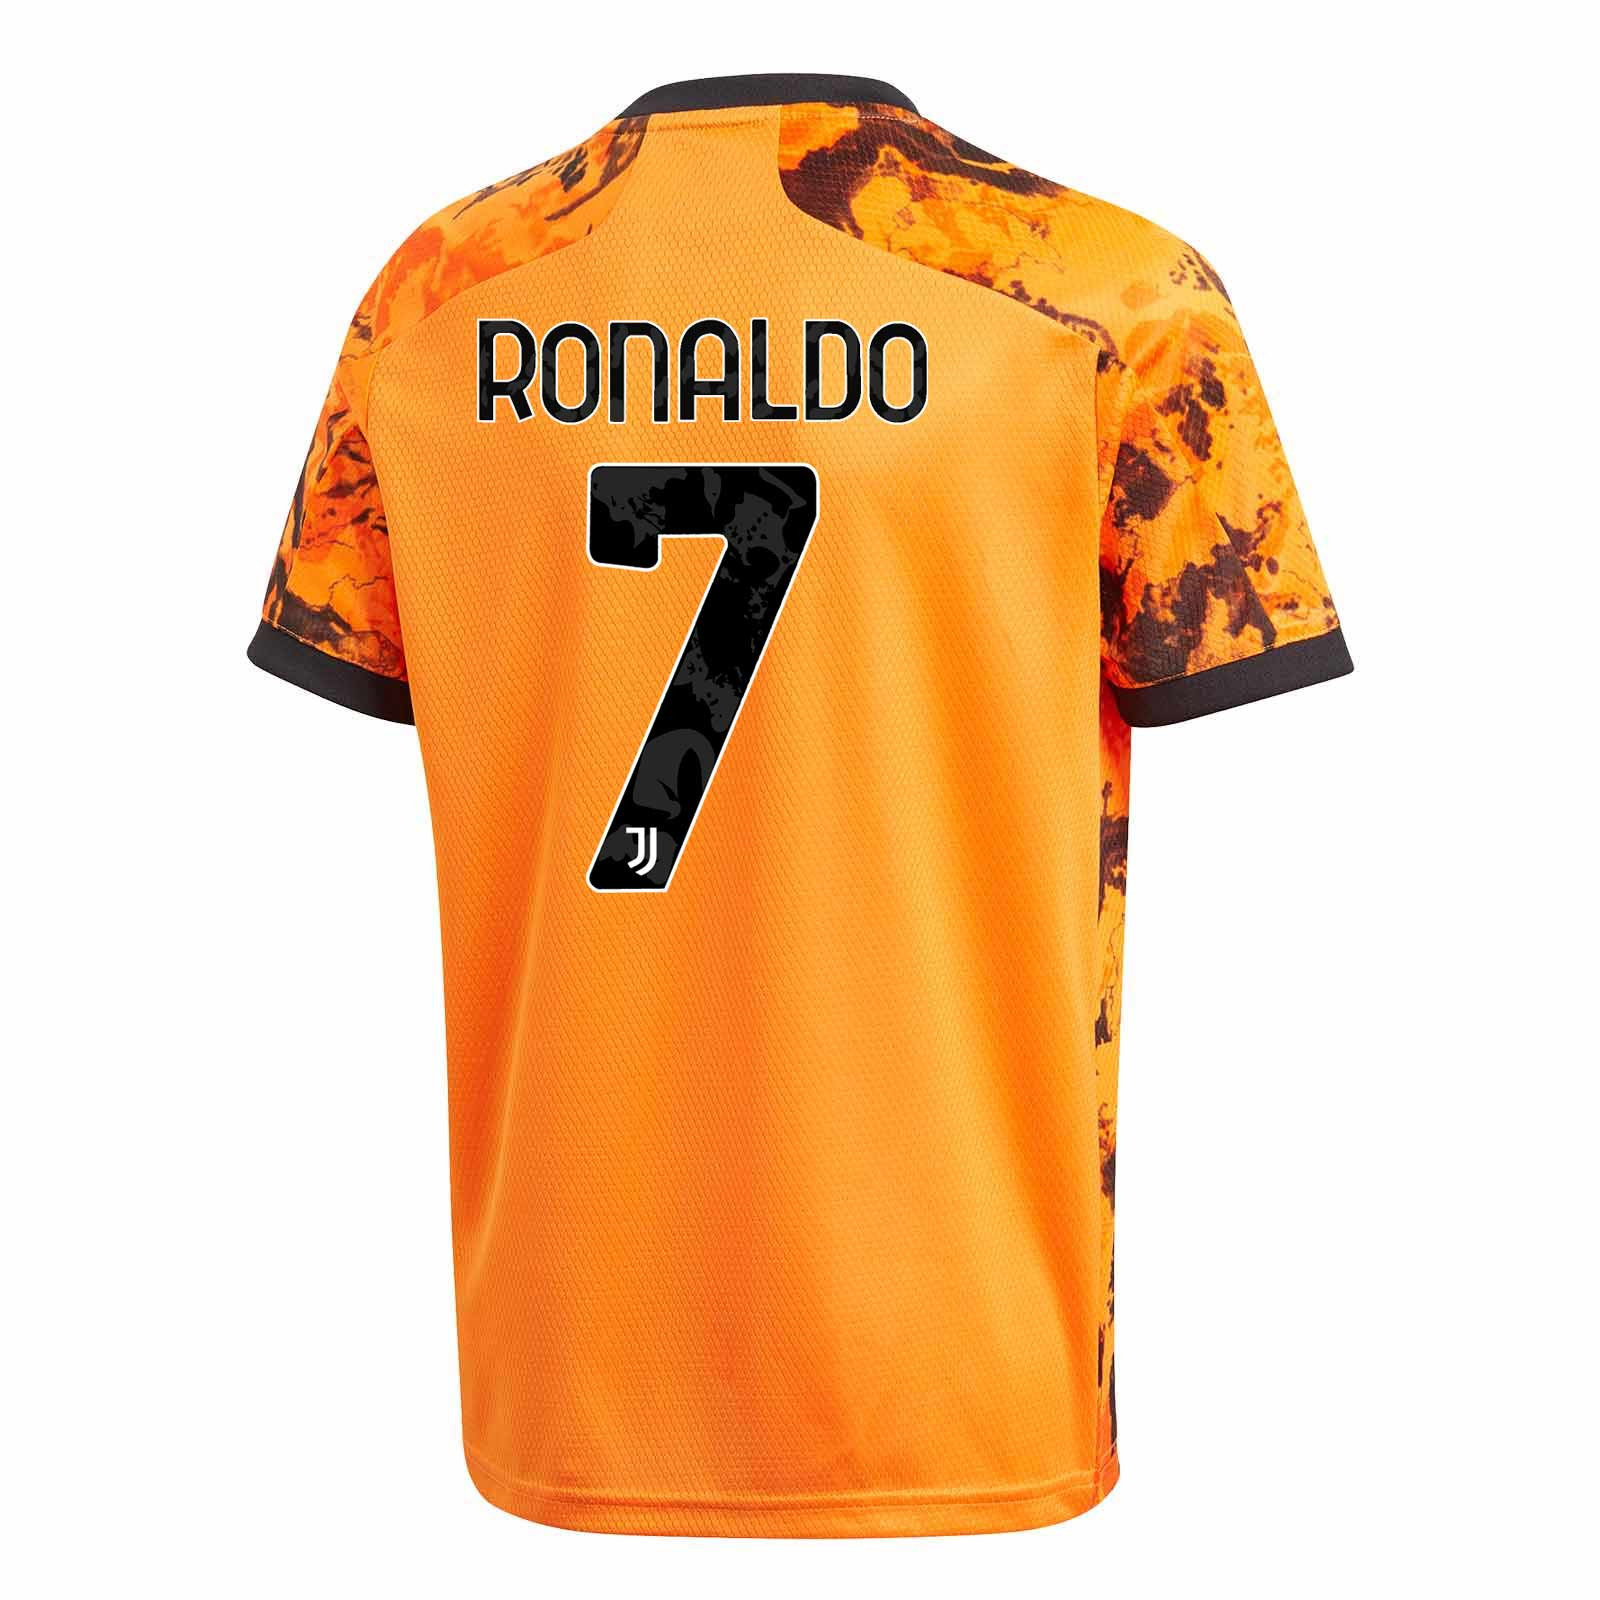 Camiseta adidas Ronaldo 3a niño 2020 2021 futbolmaniaKids